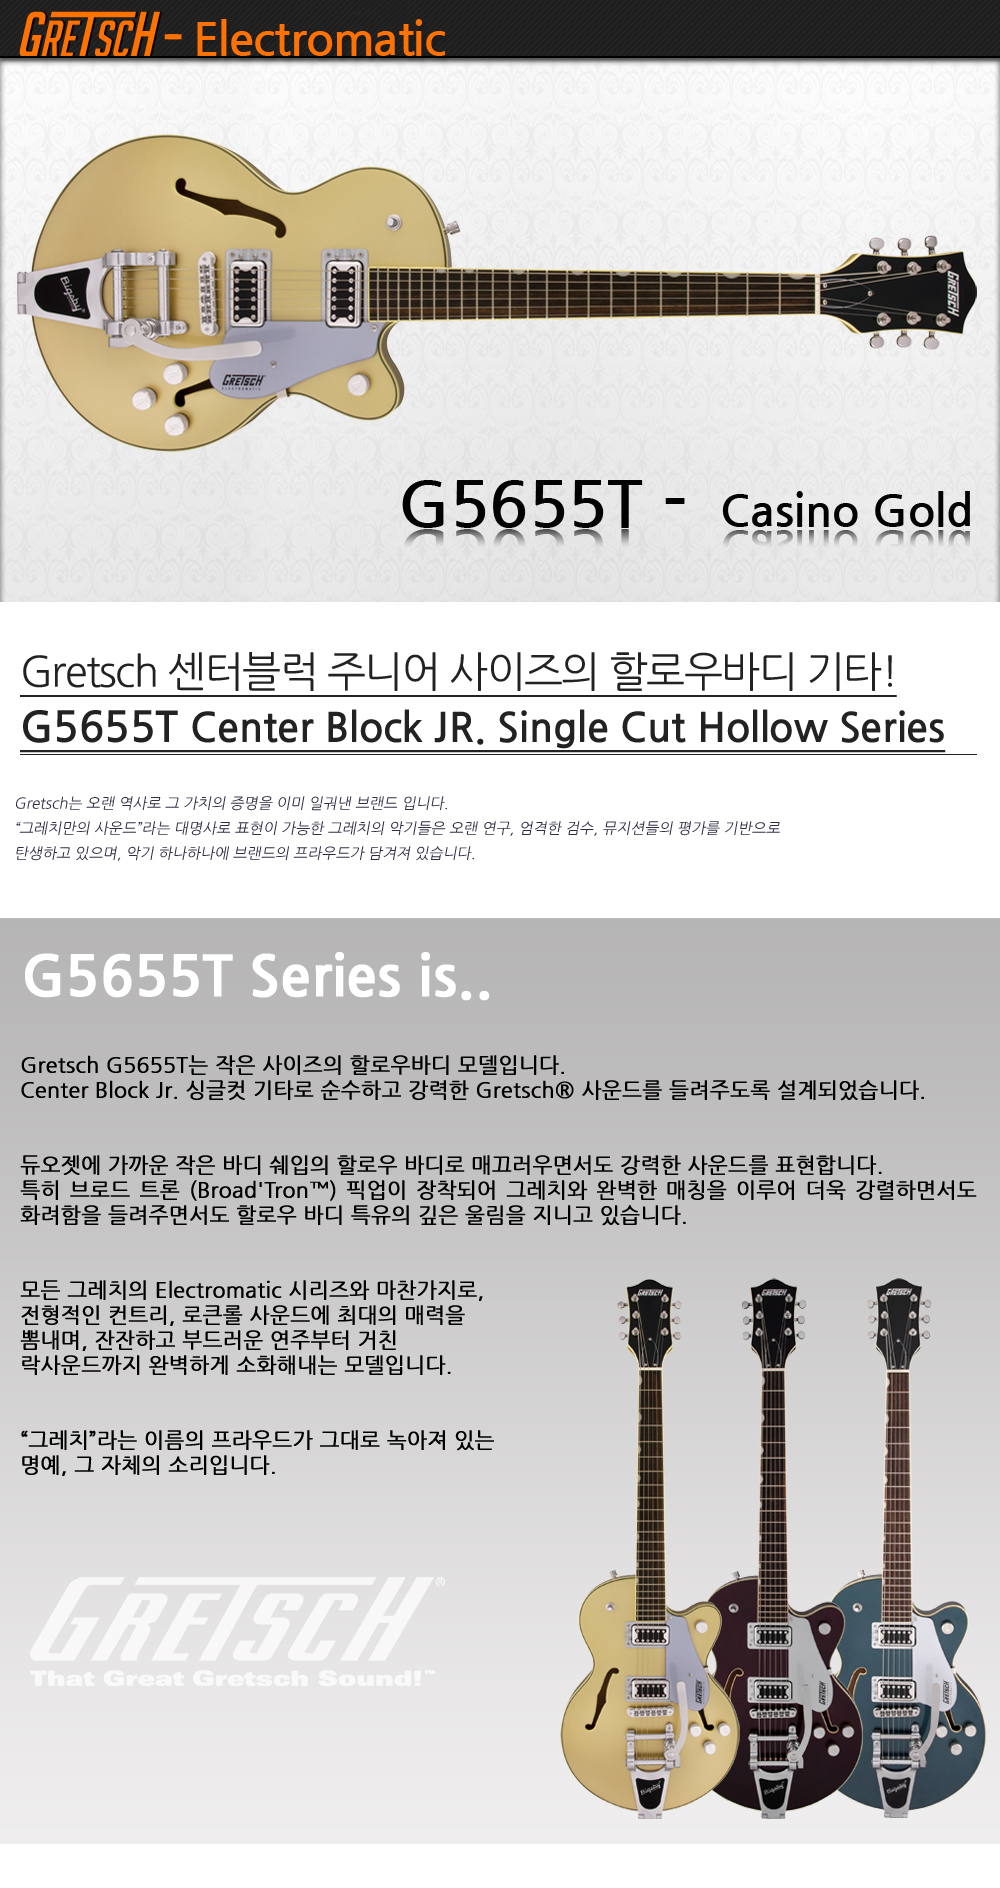 Gretsch-G5655T-CasinoGold_1_103856.jpg